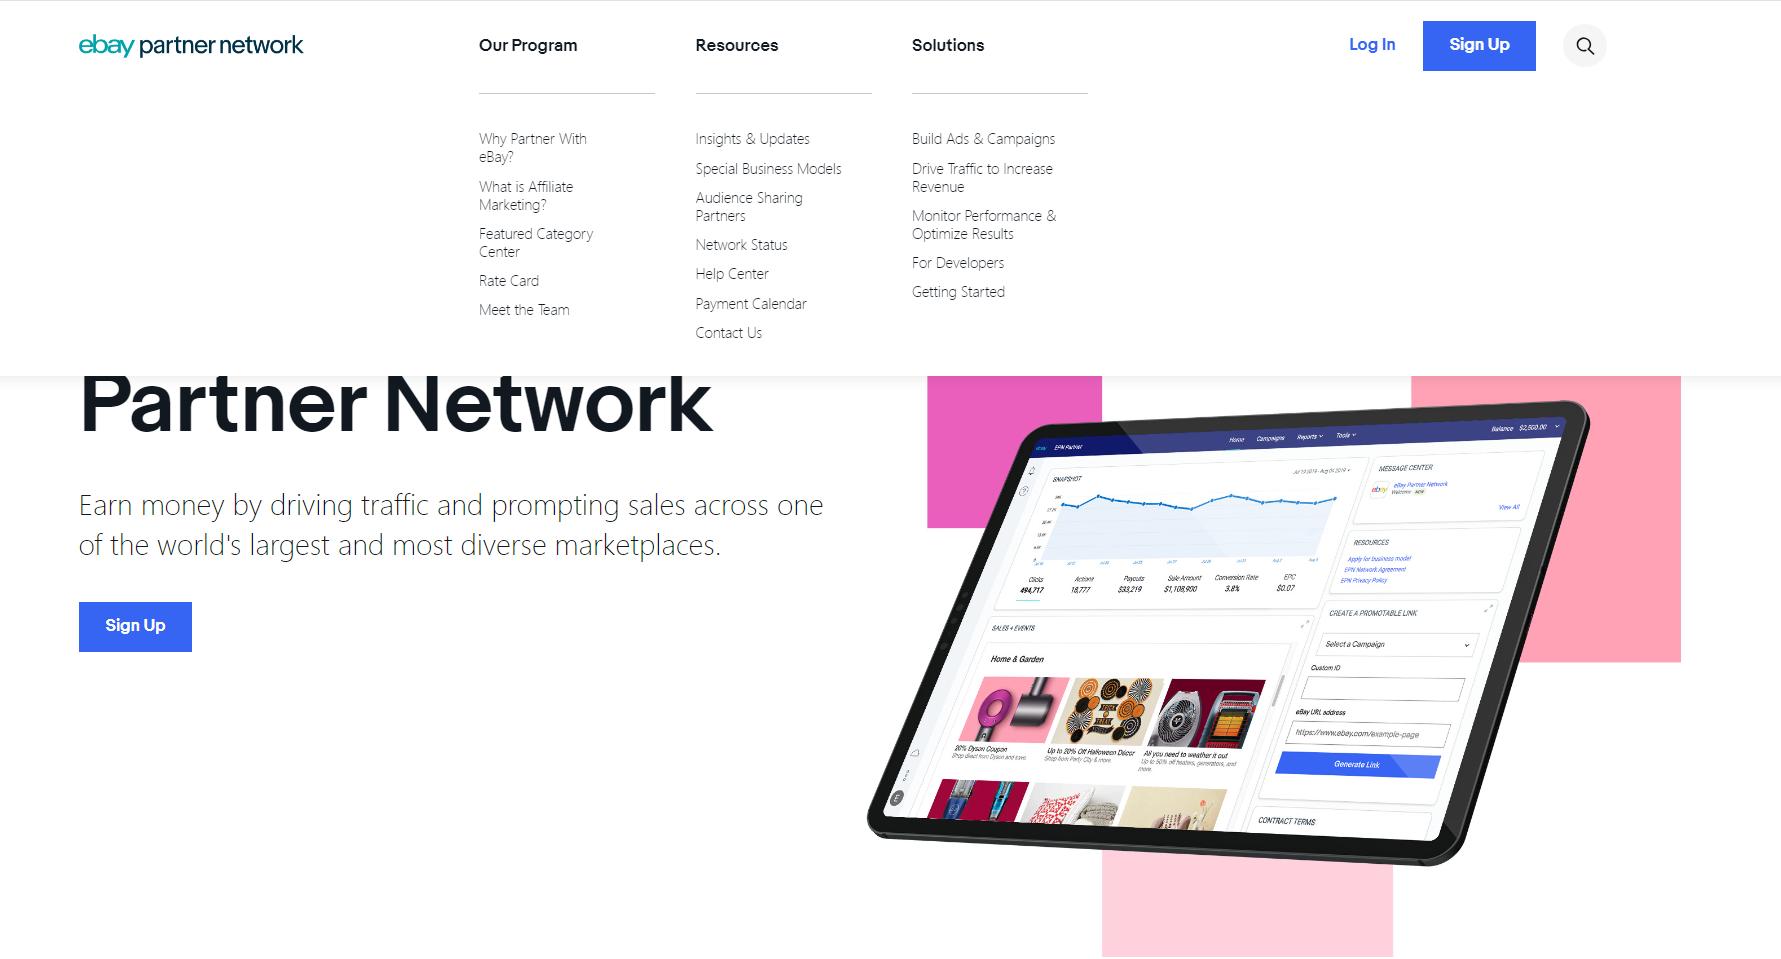 eBay Partner Network官方網站介面